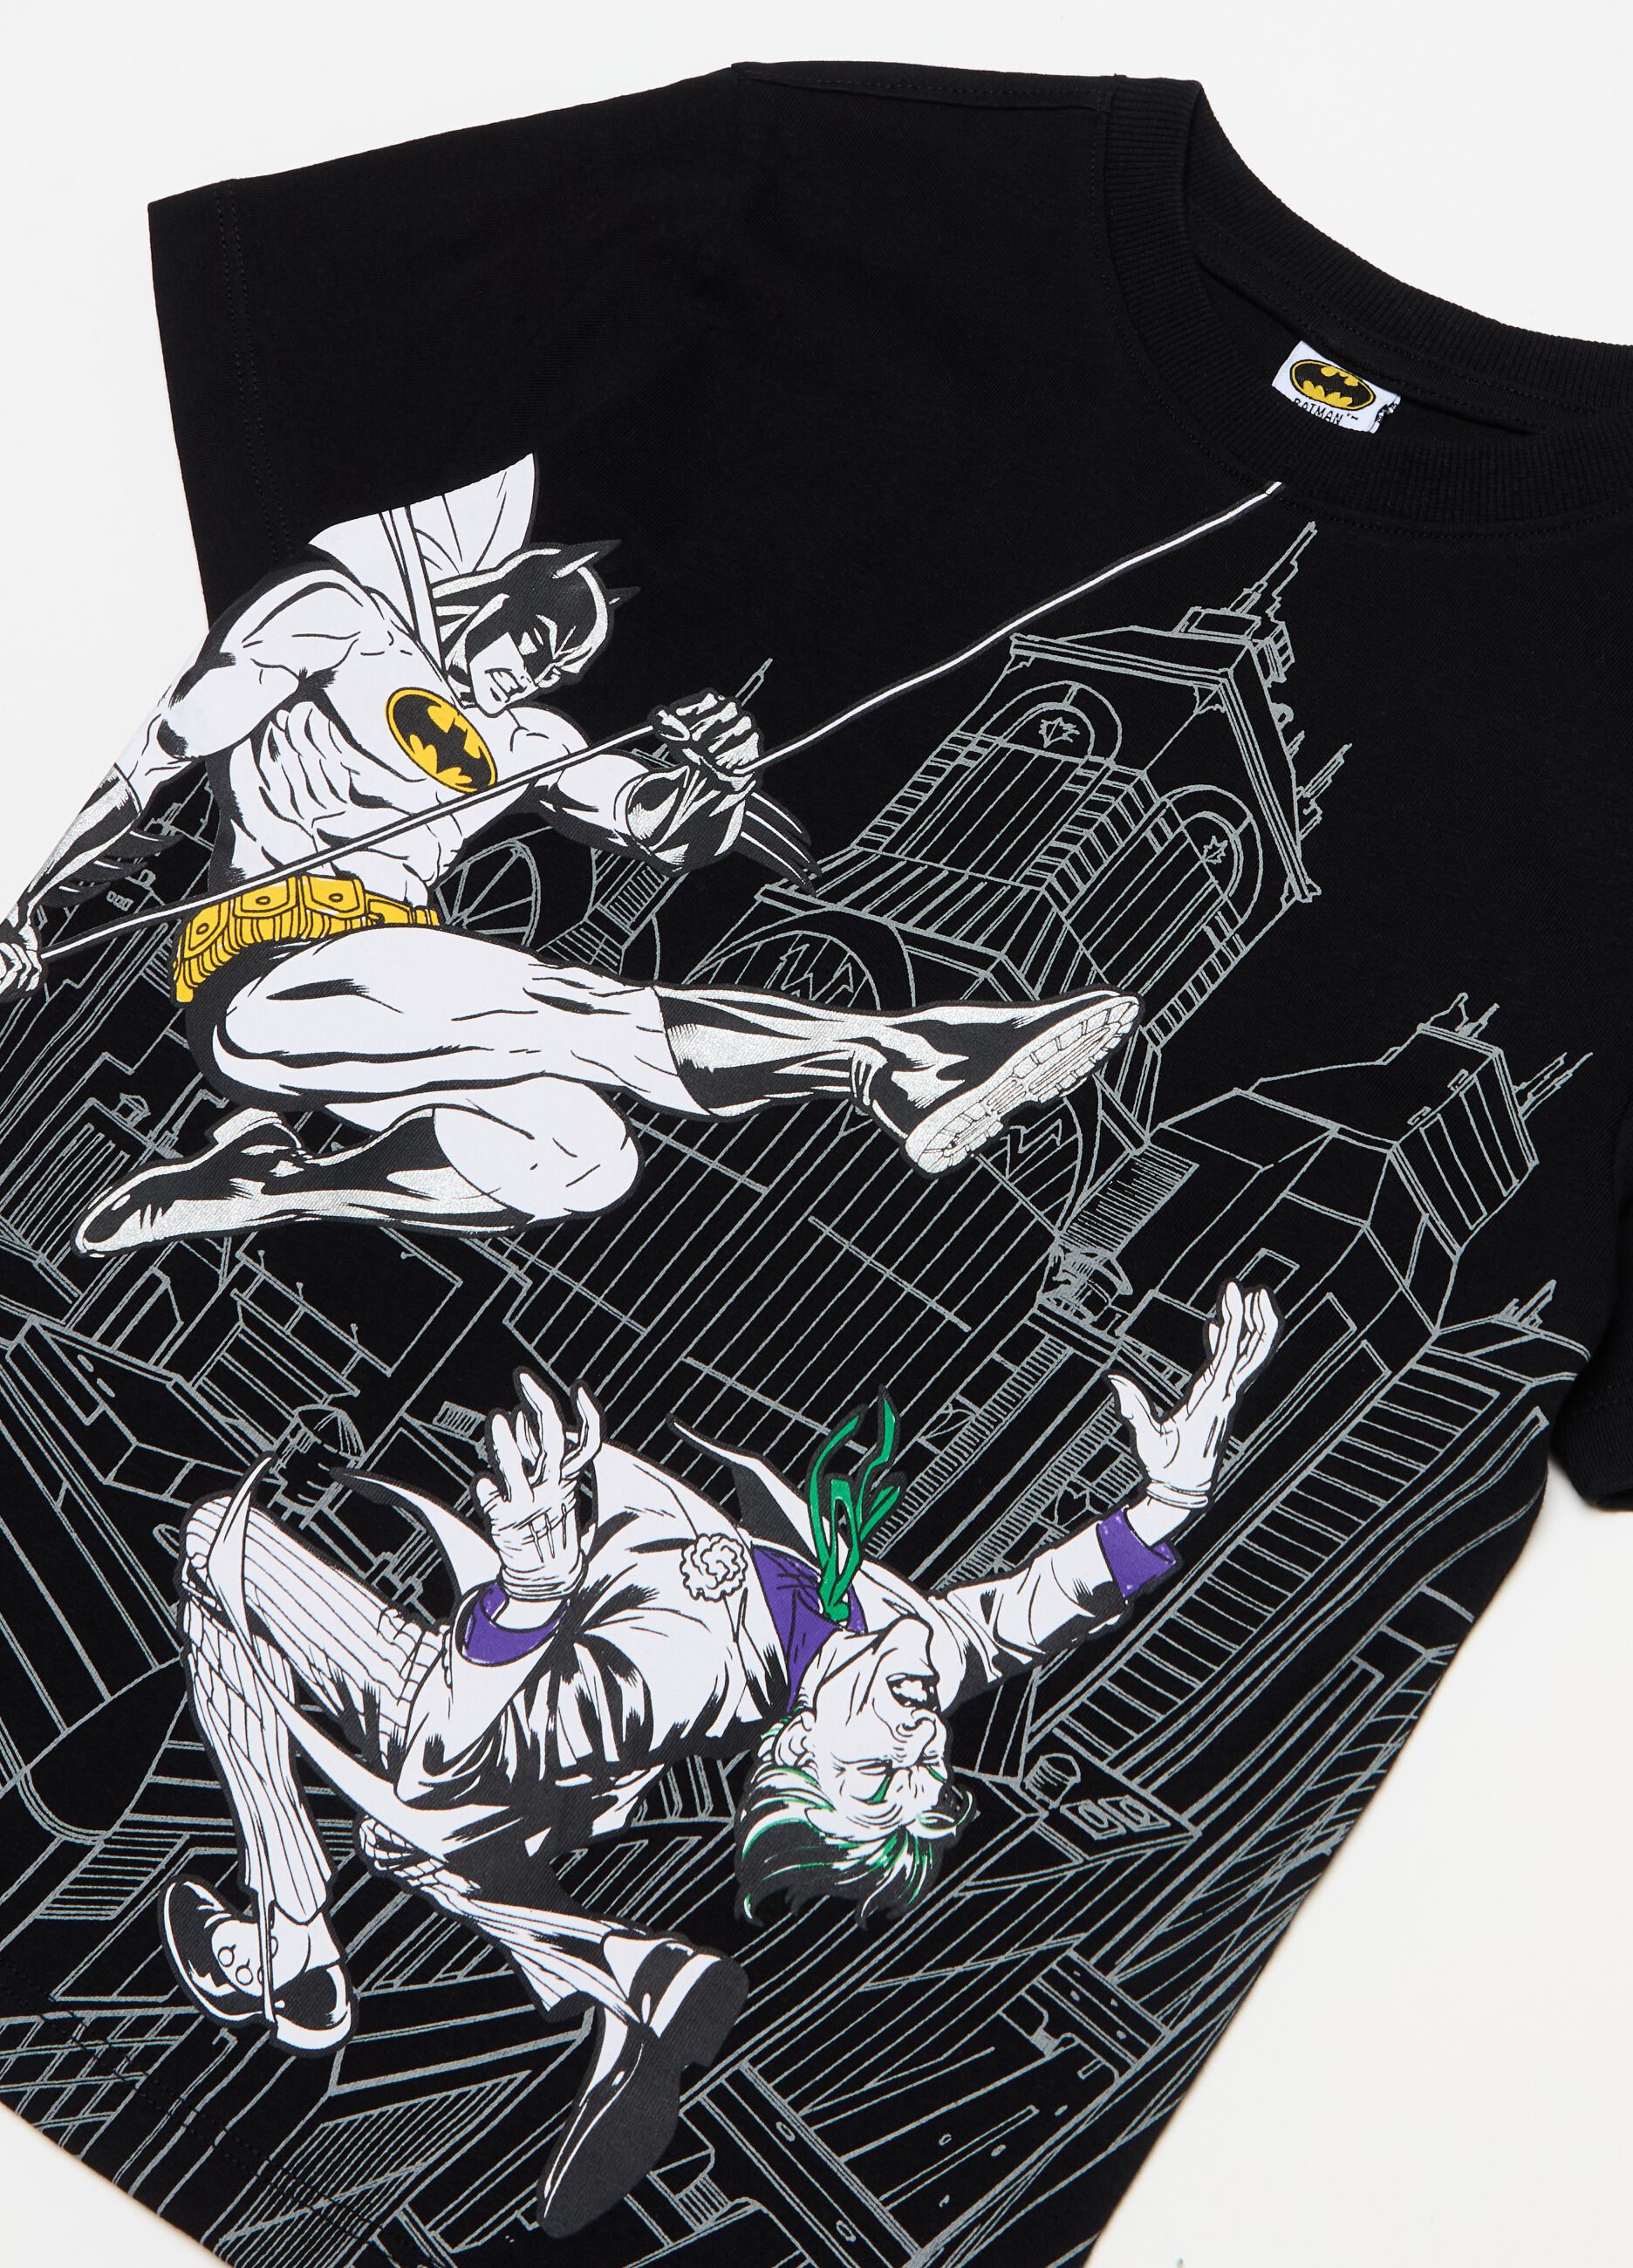 Batman and Joker jogging set in cotton